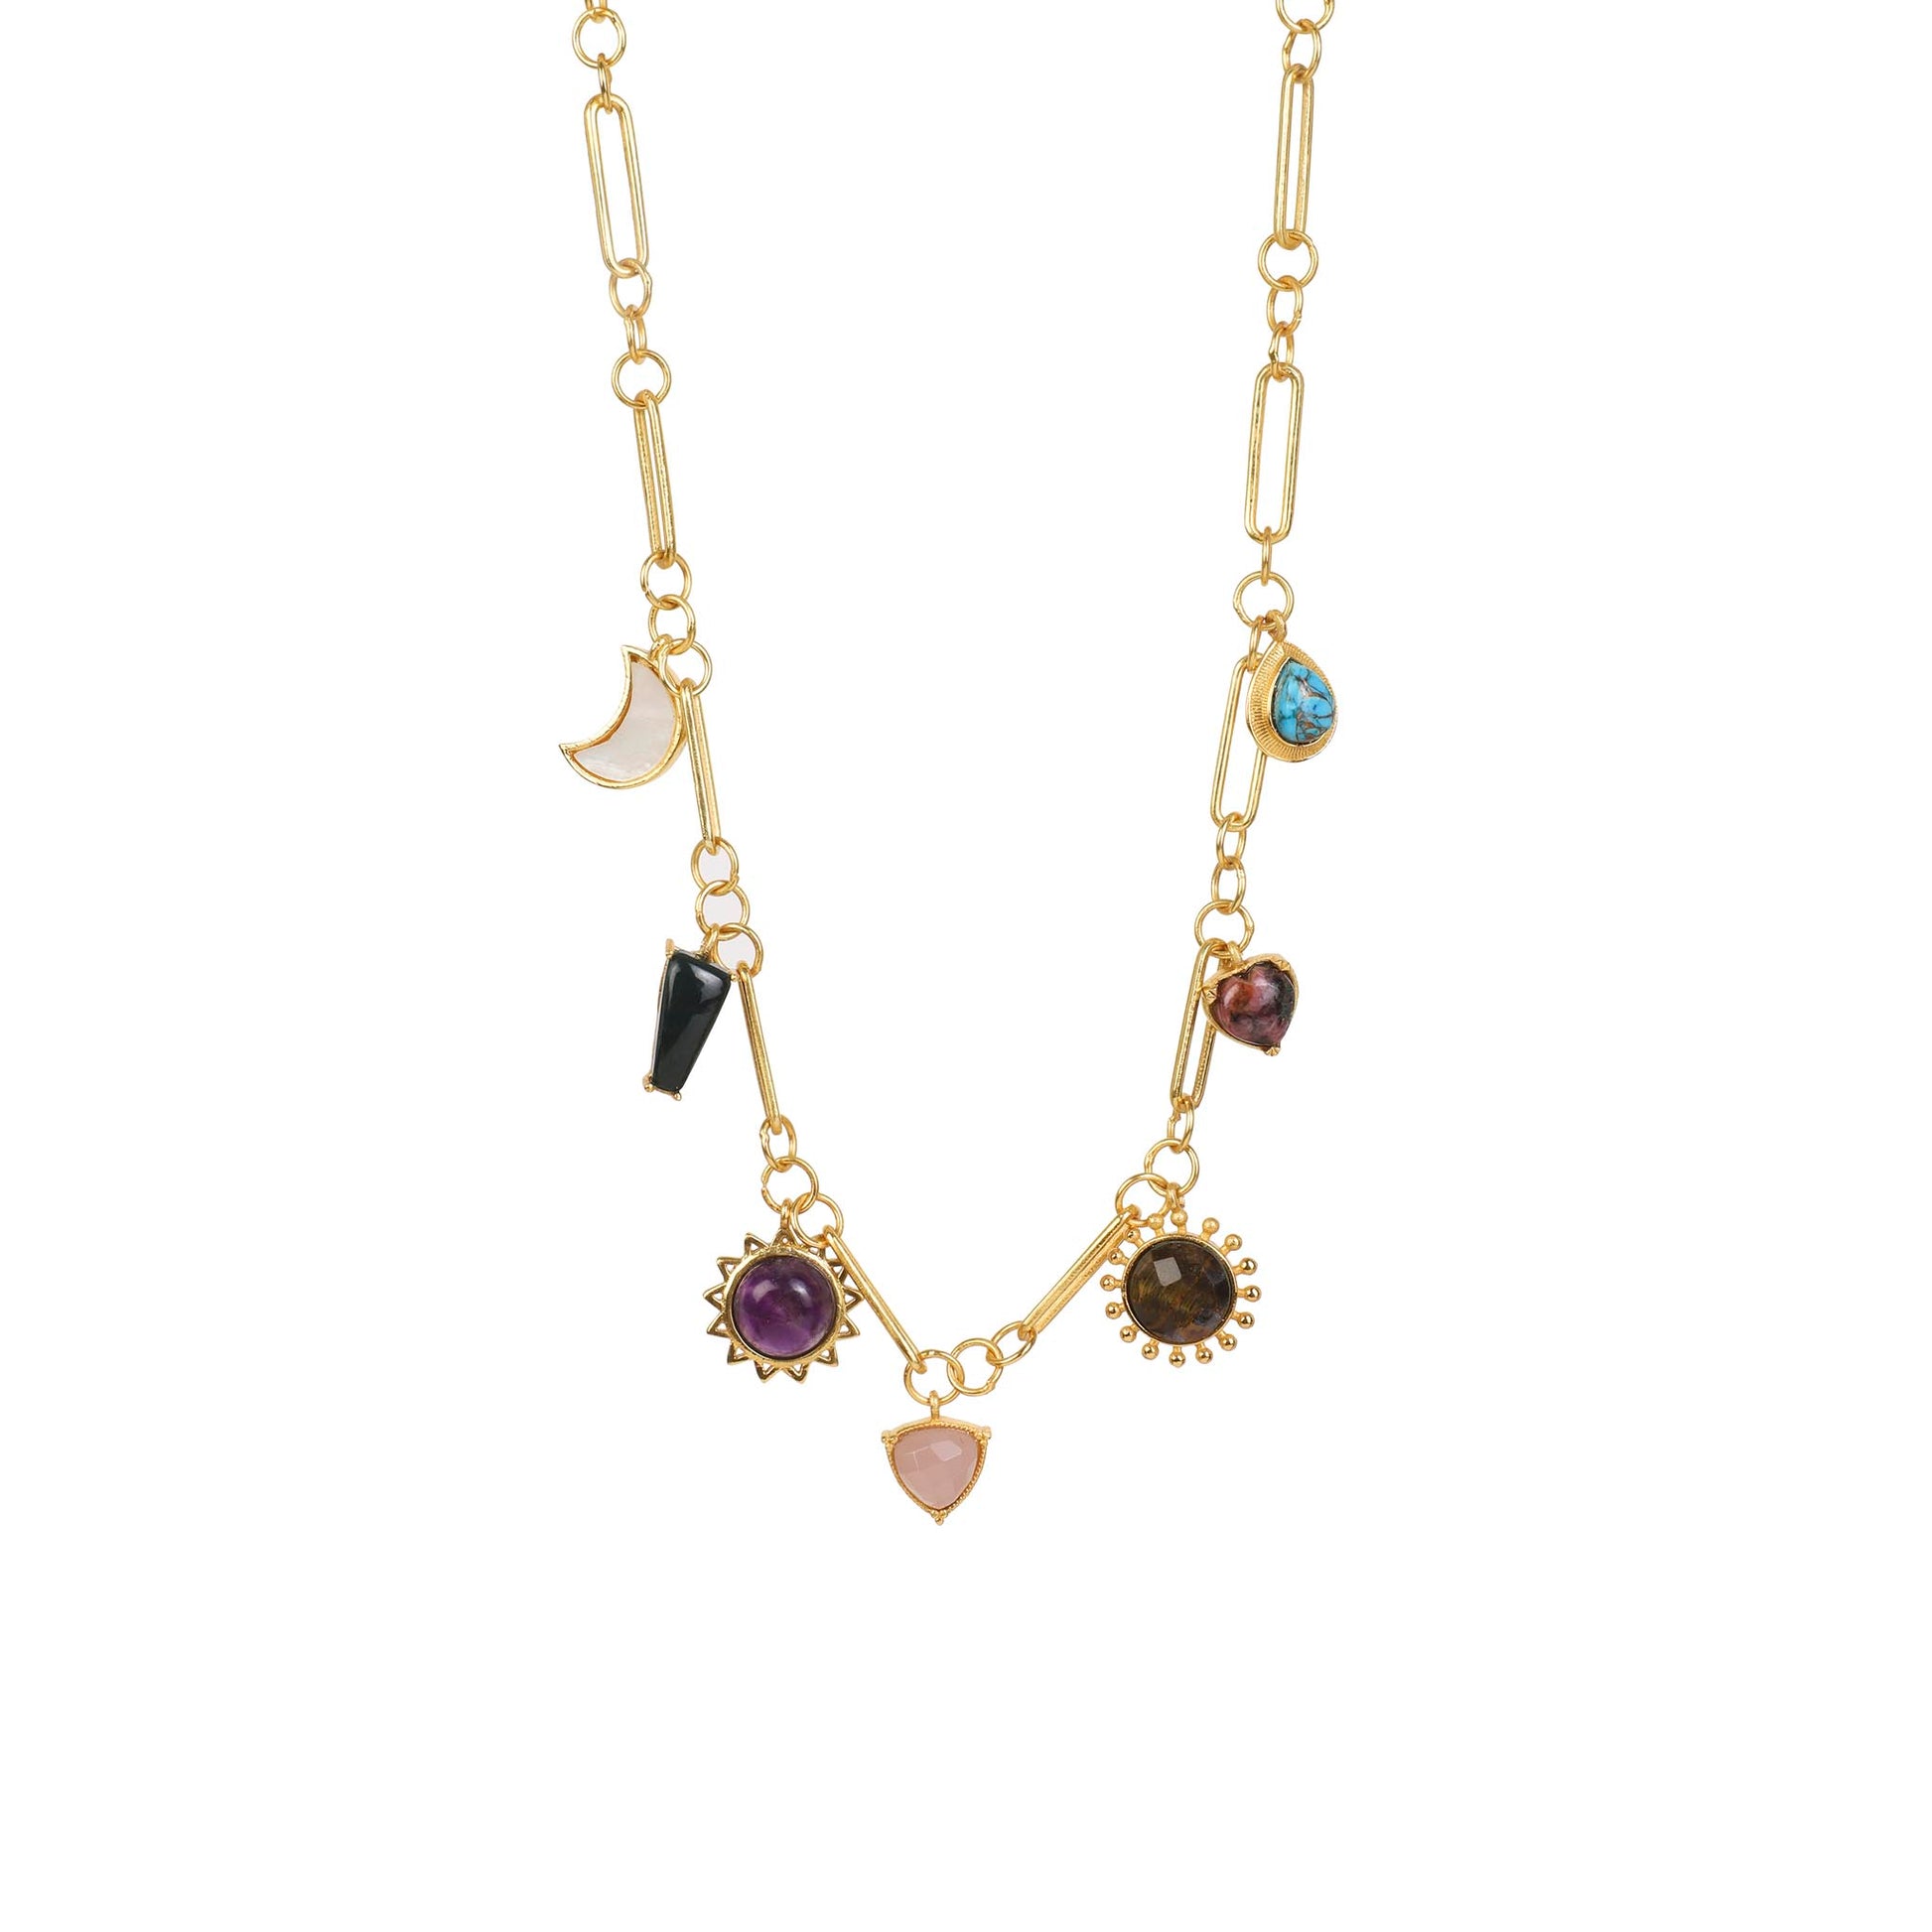 Stellar Elegance - 7 Healing Stones Link Chain Necklace - Lila Rasa